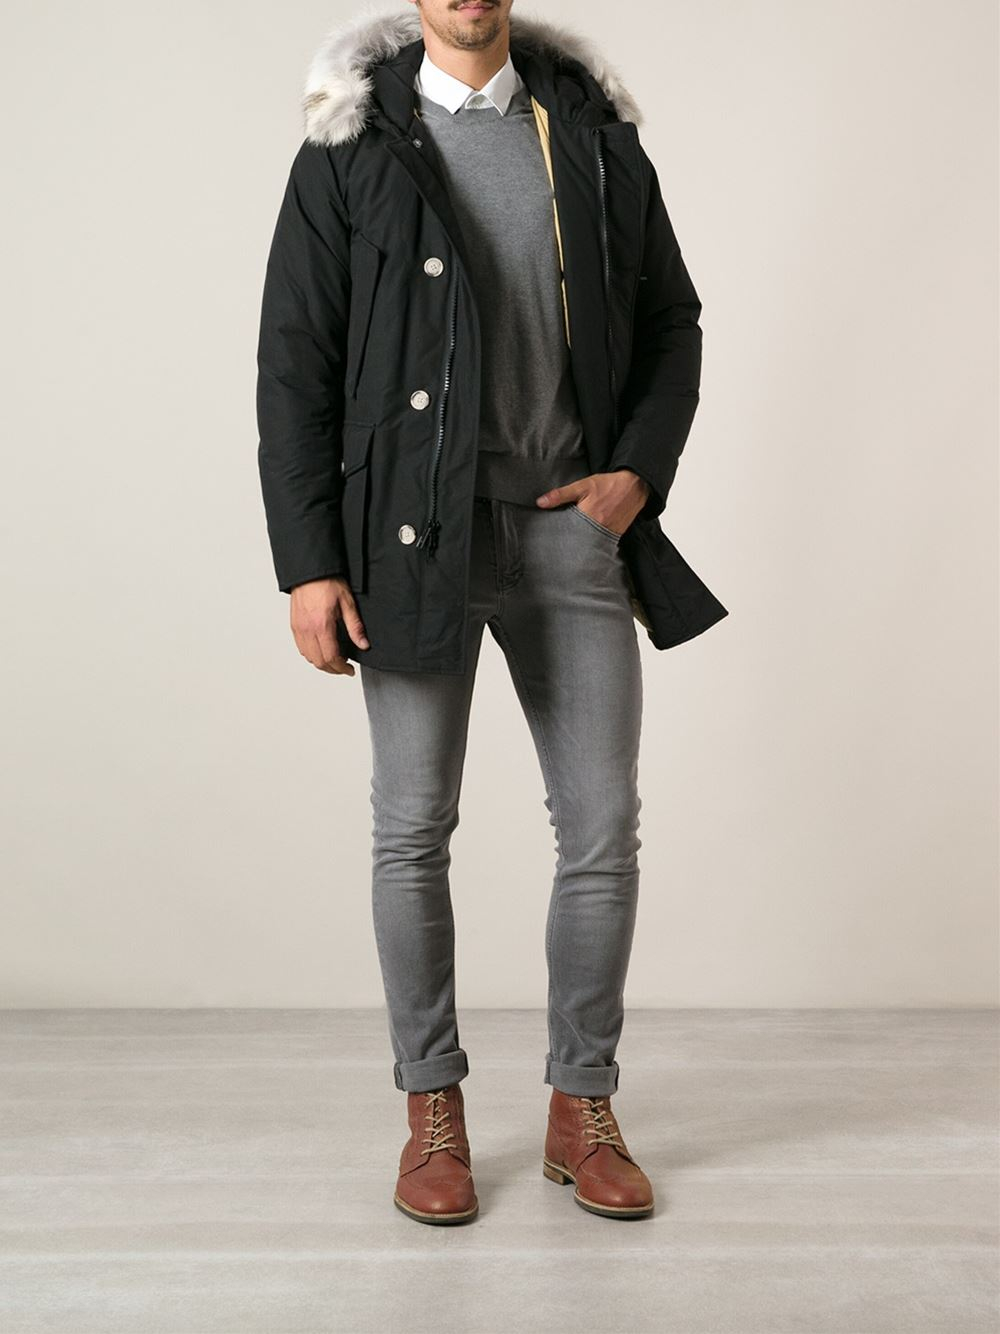 Lyst - Woolrich Padded Fur Detail Jacket in Black for Men